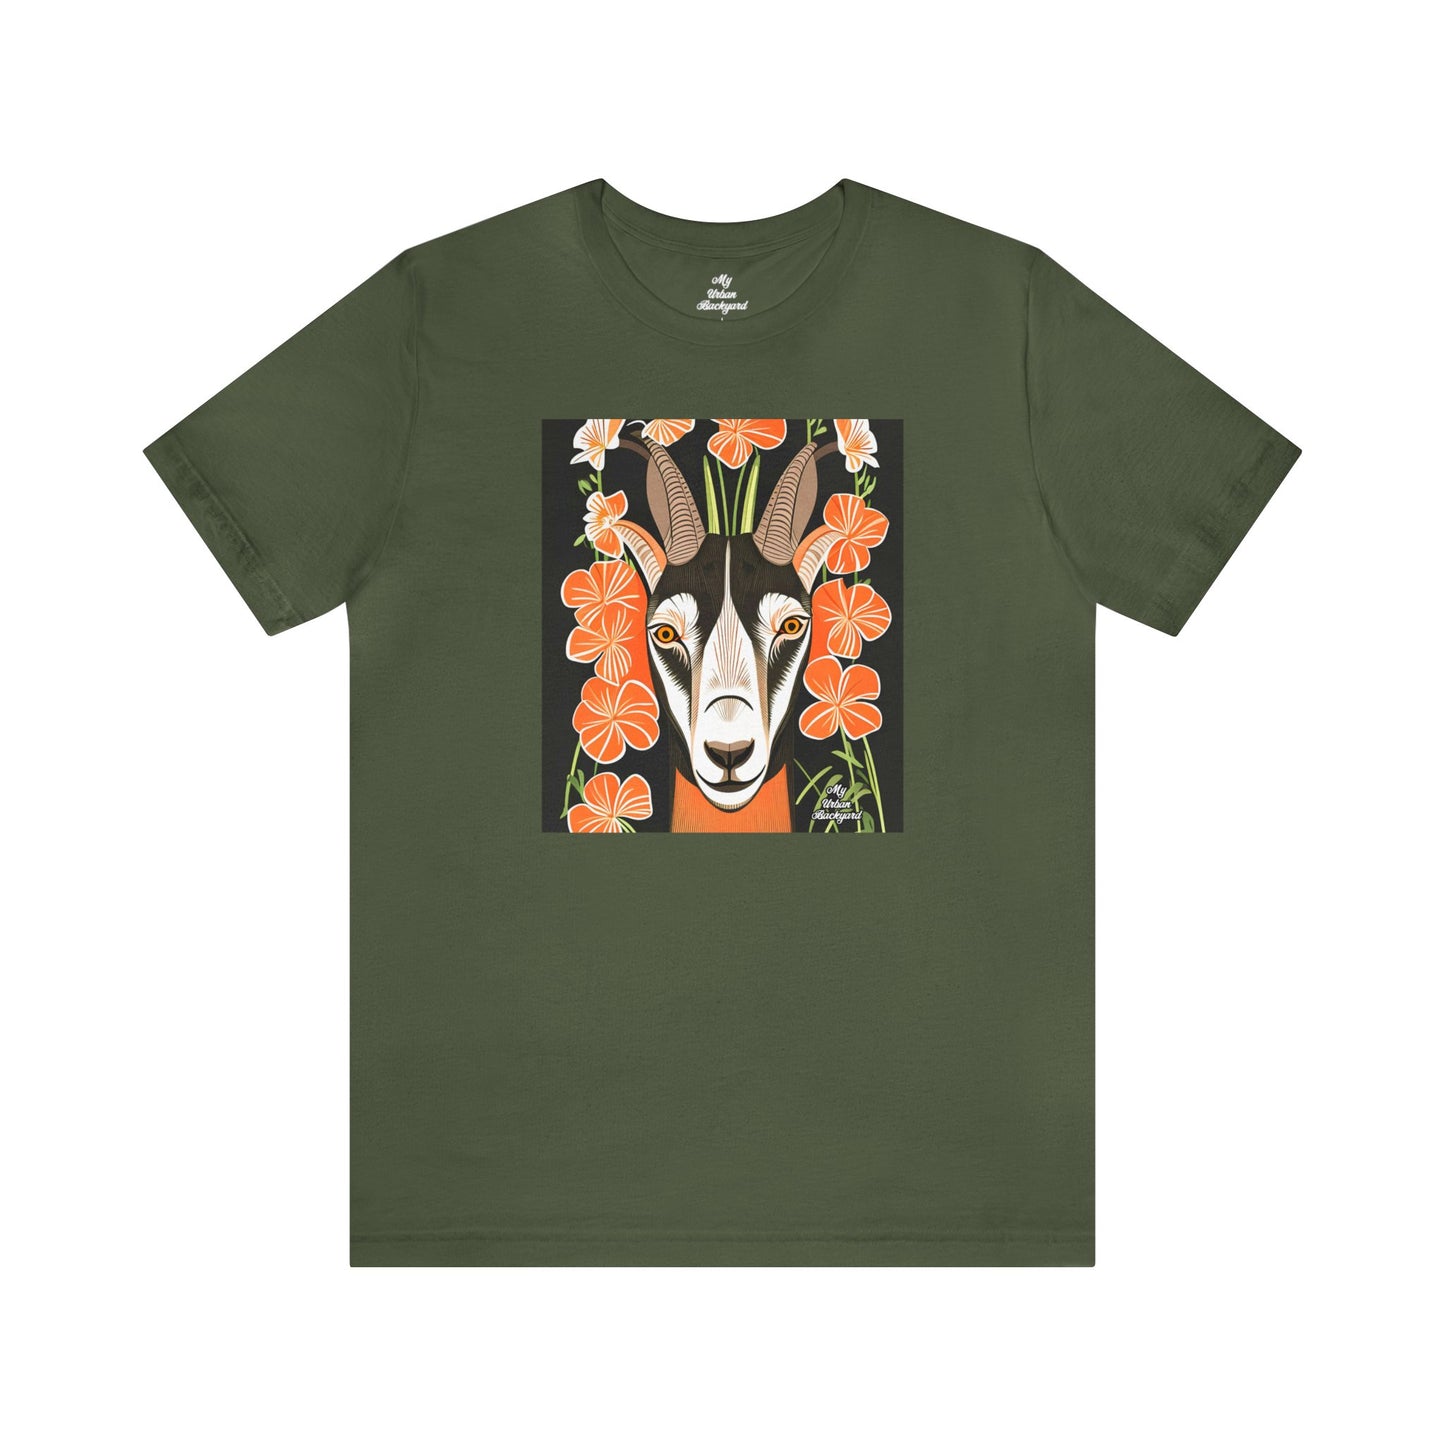 Goat with Orange Flowers, Soft 100% Jersey Cotton T-Shirt, Unisex, Short Sleeve, Retail Fit